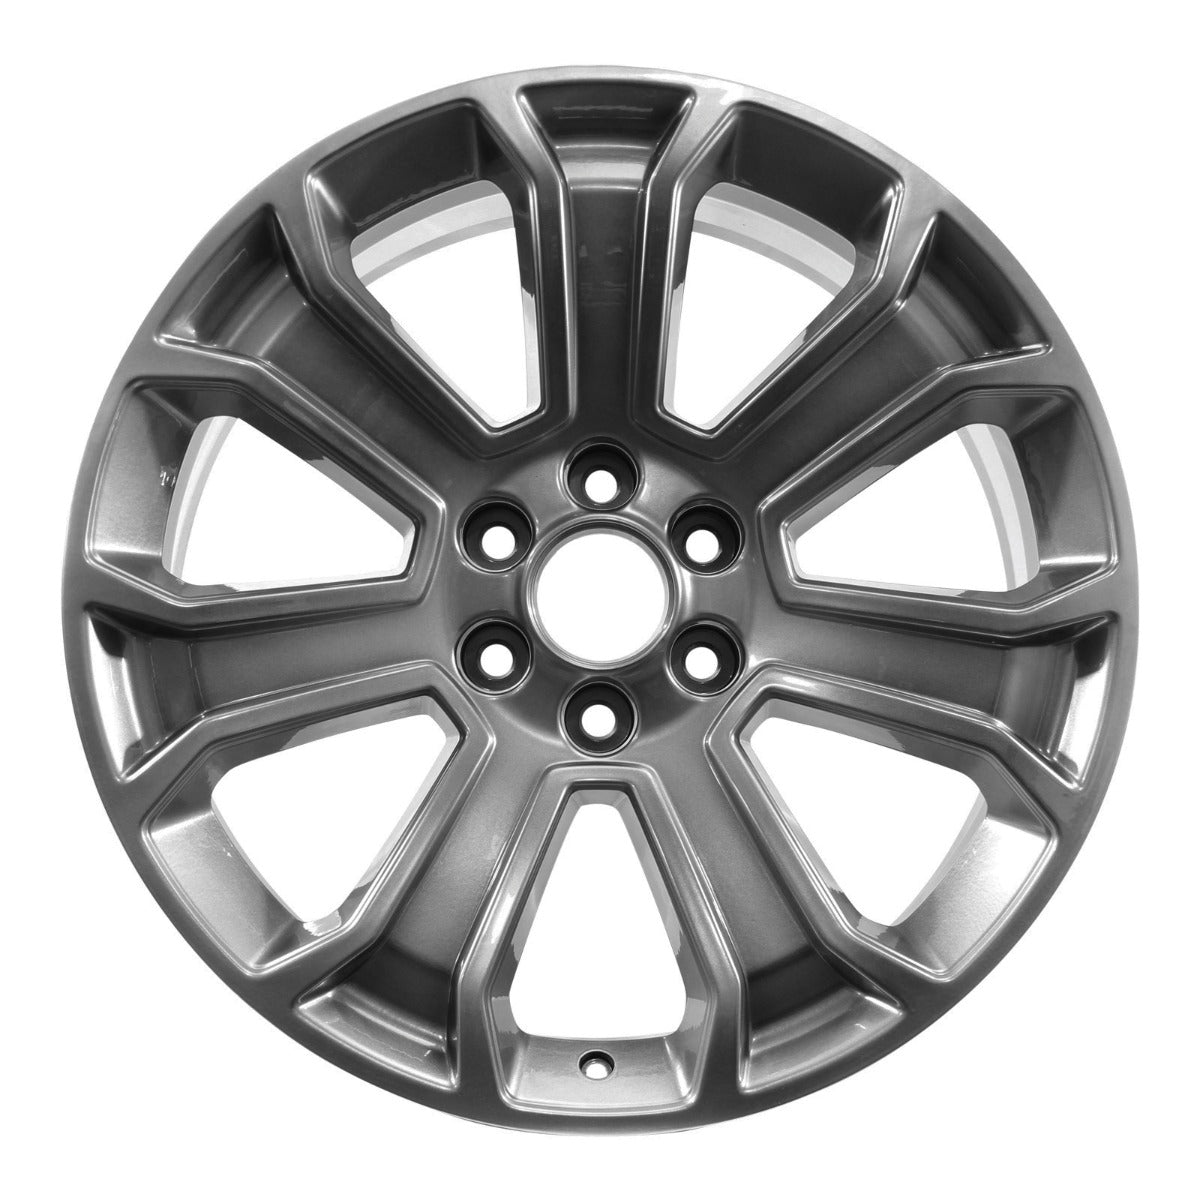 2014 Chevrolet Silverado 1500 22" OEM Wheel Rim W5665H